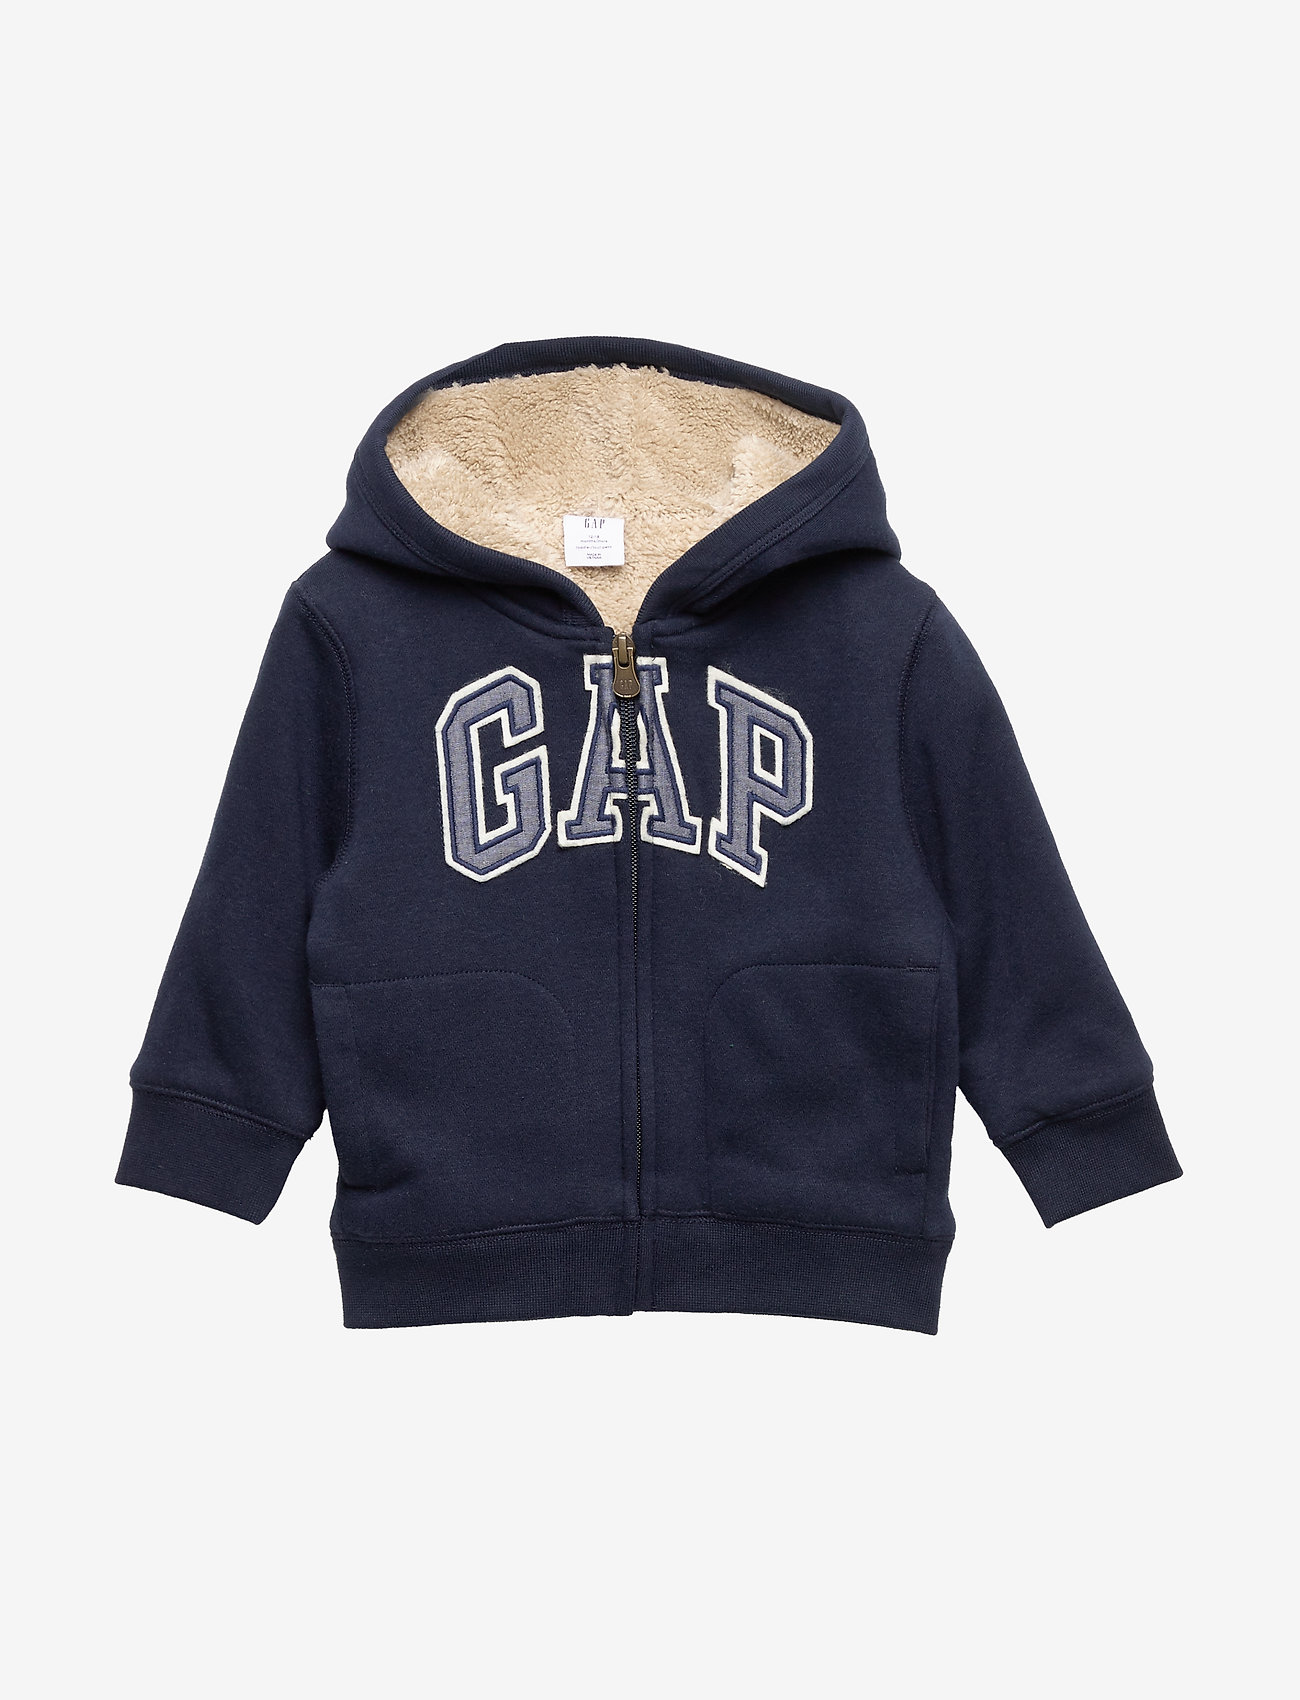 sherpa hoodie toddler